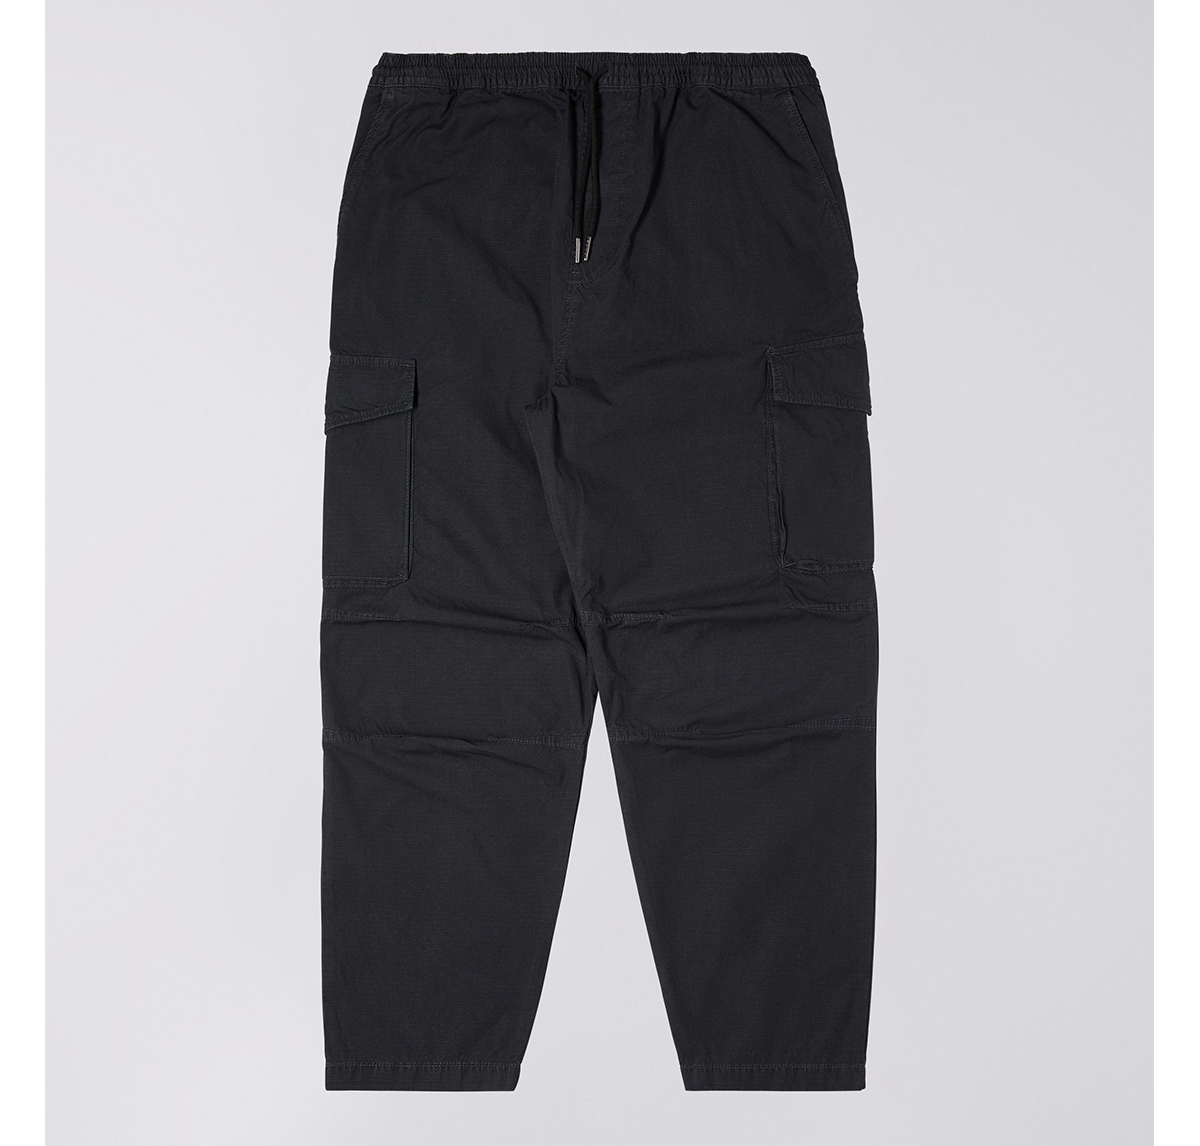 EDWIN Squad Pant - Rip Stop - Black Garment Dyed front flat